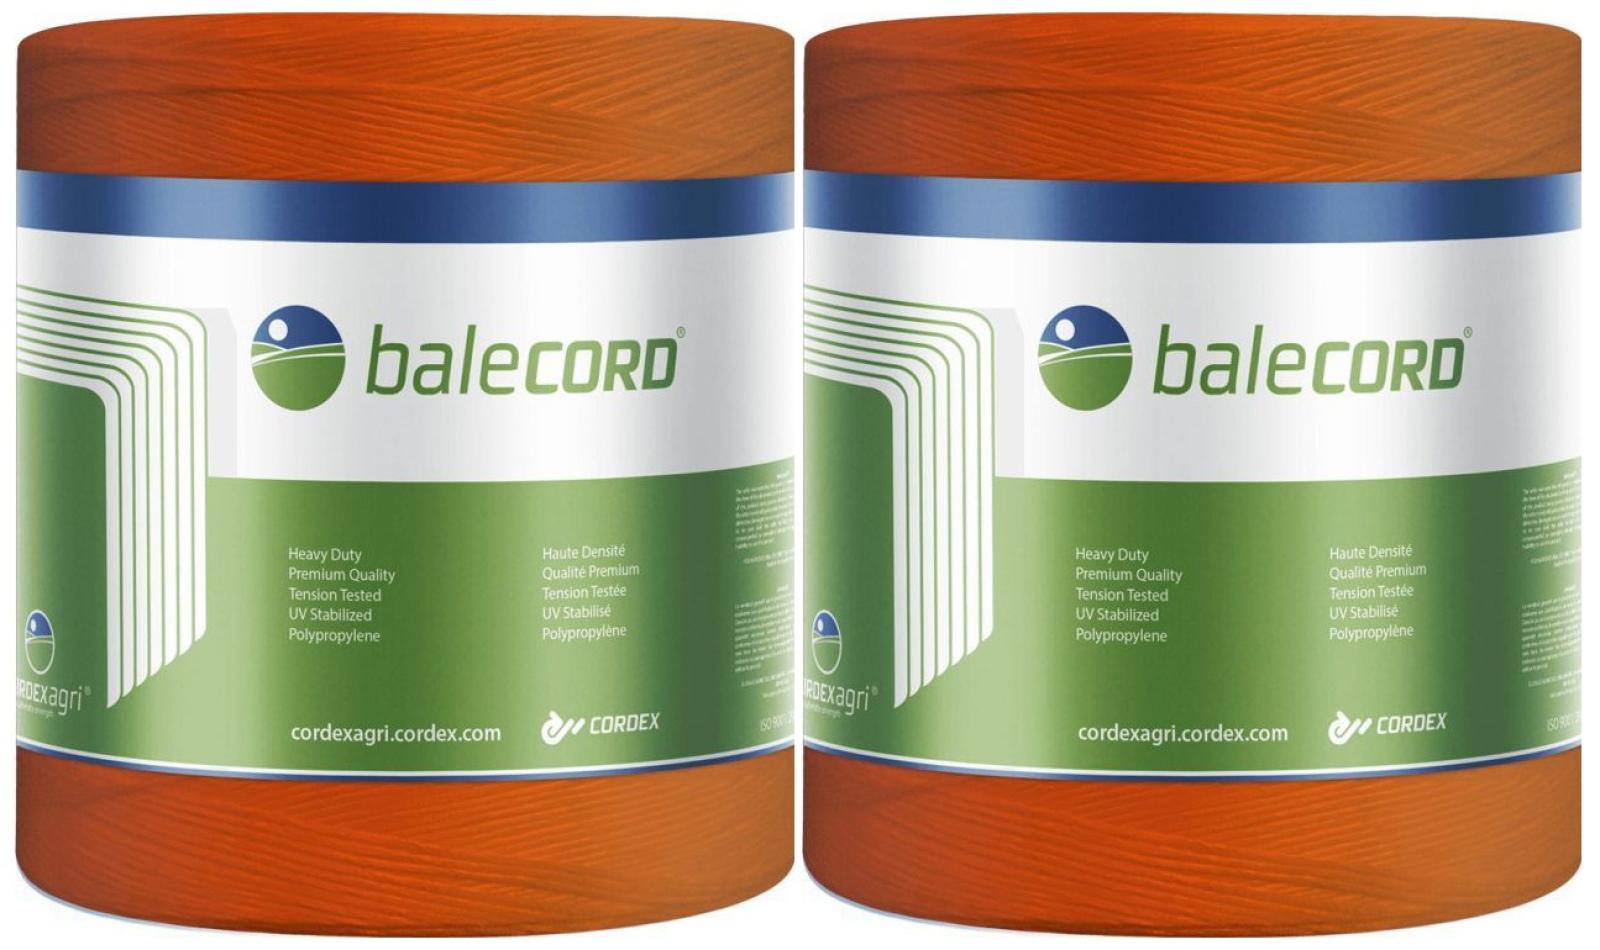 Cordex Balecord Orange Plastic Baler Twine